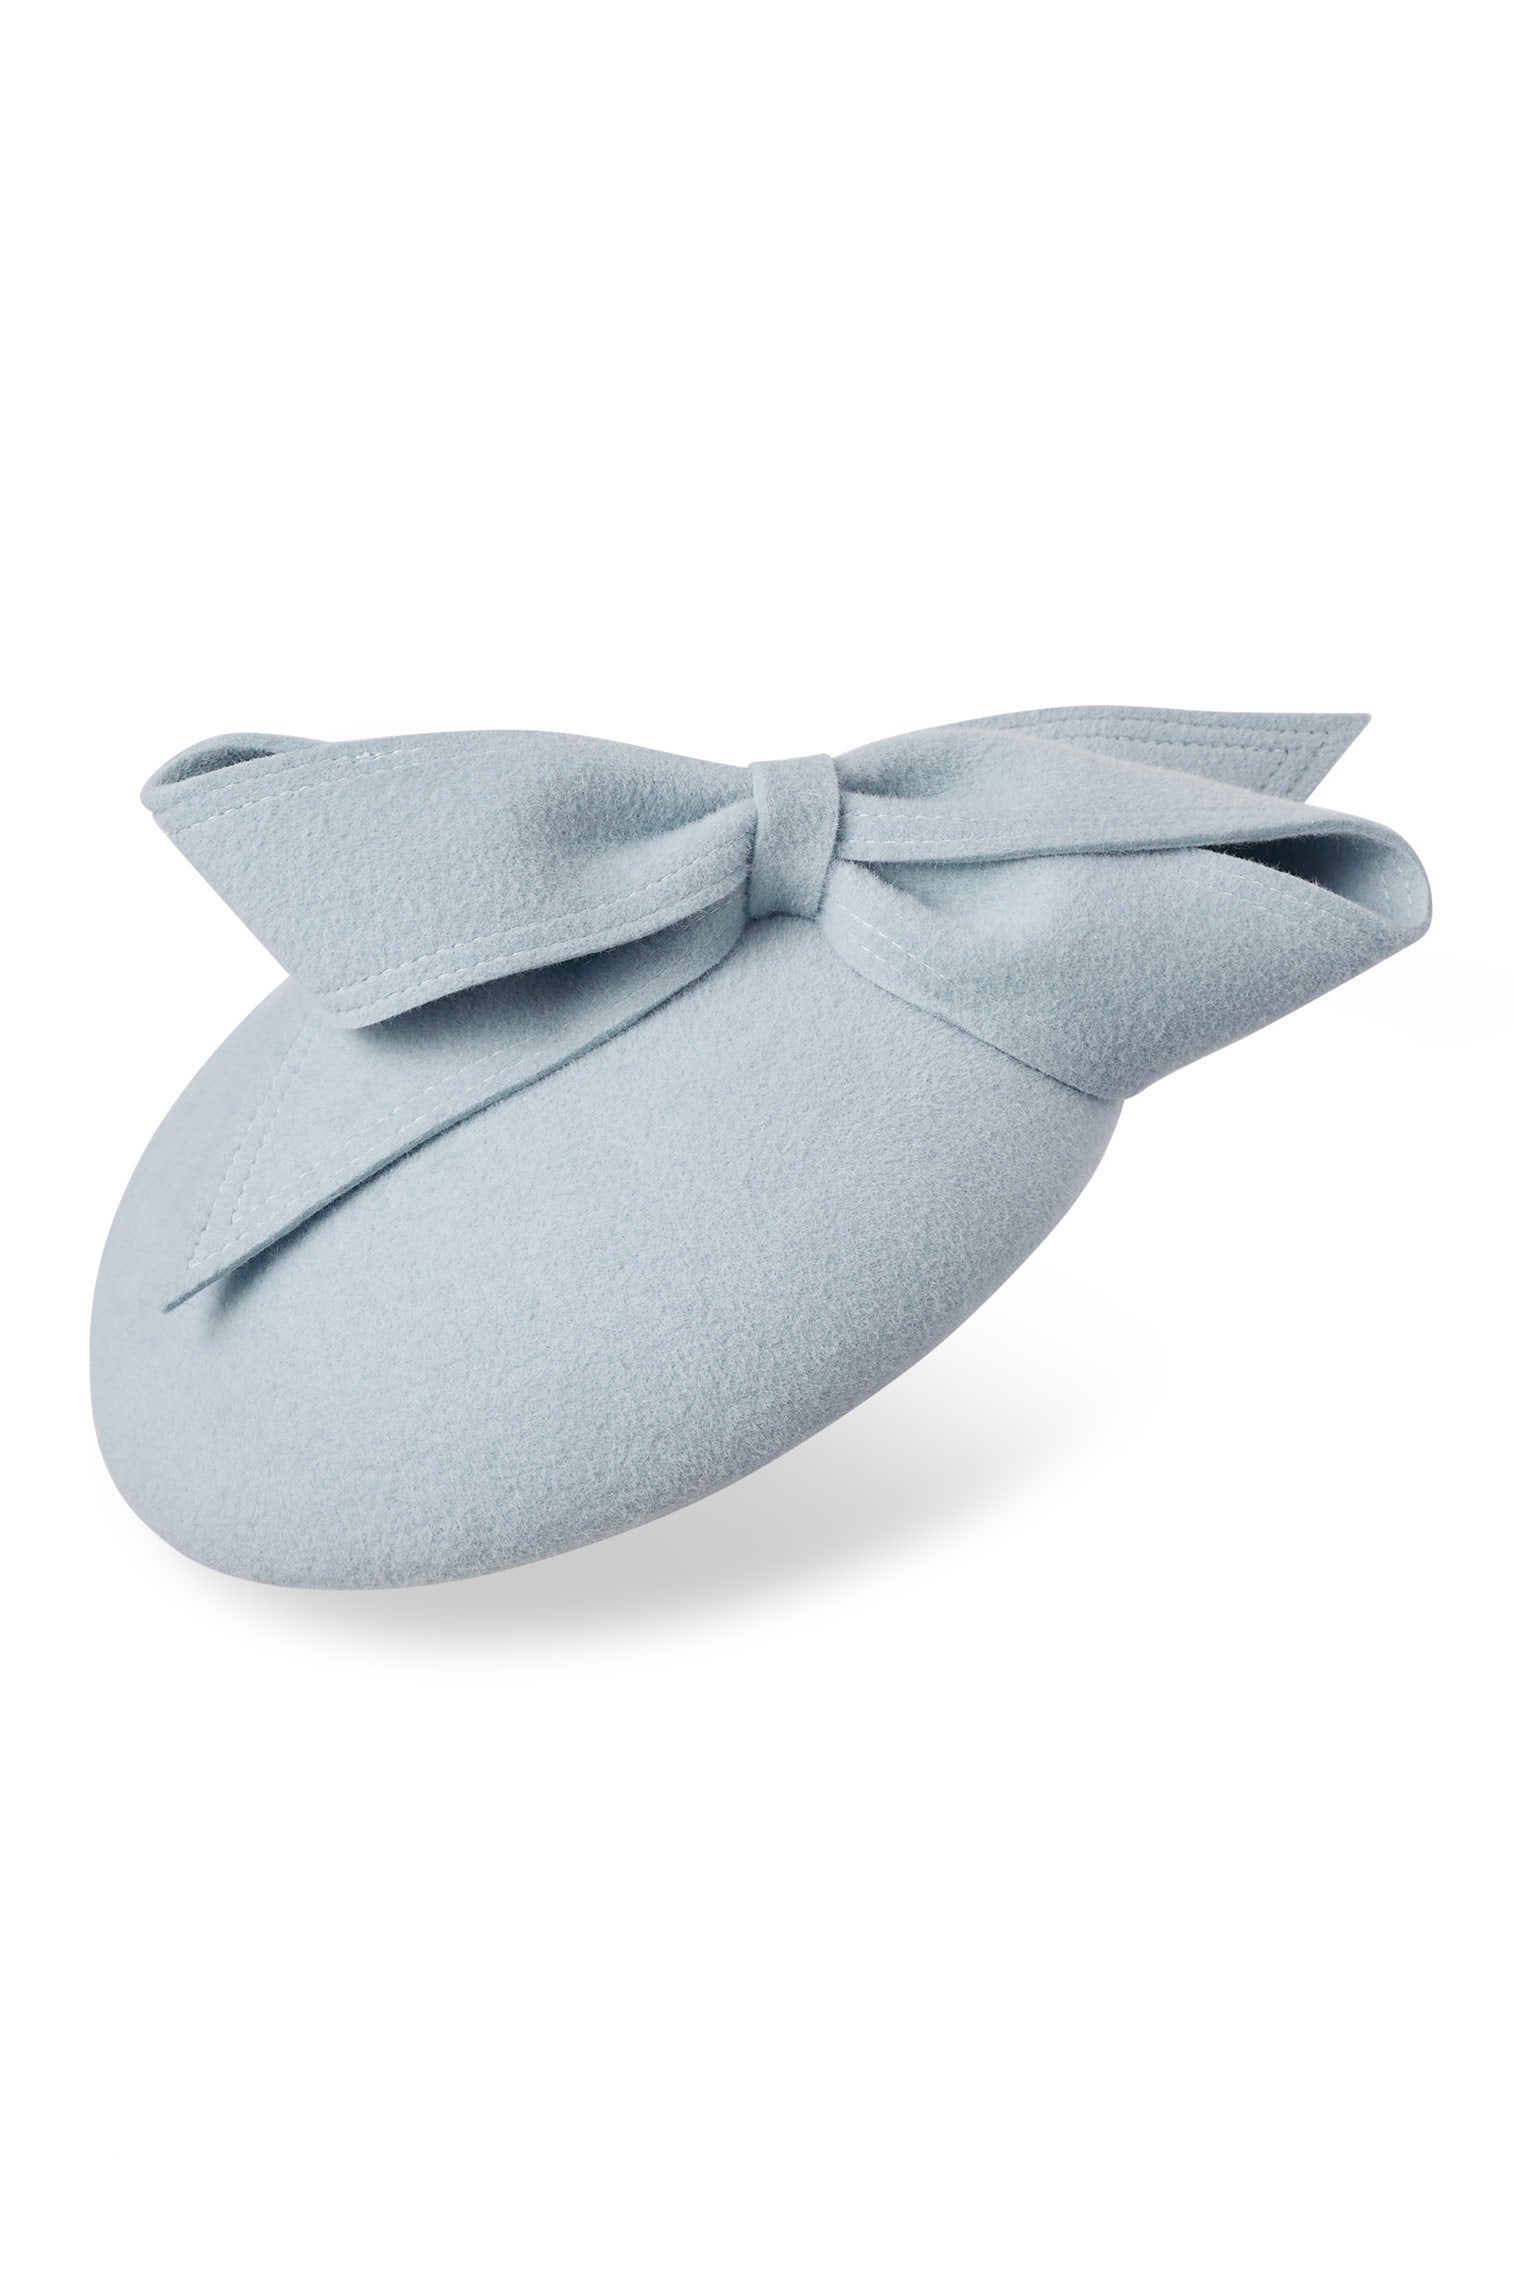 Lana Light Blue Button Hat - Lock & Co. Christmas Gift Edit - Lock & Co. Hatters London UK